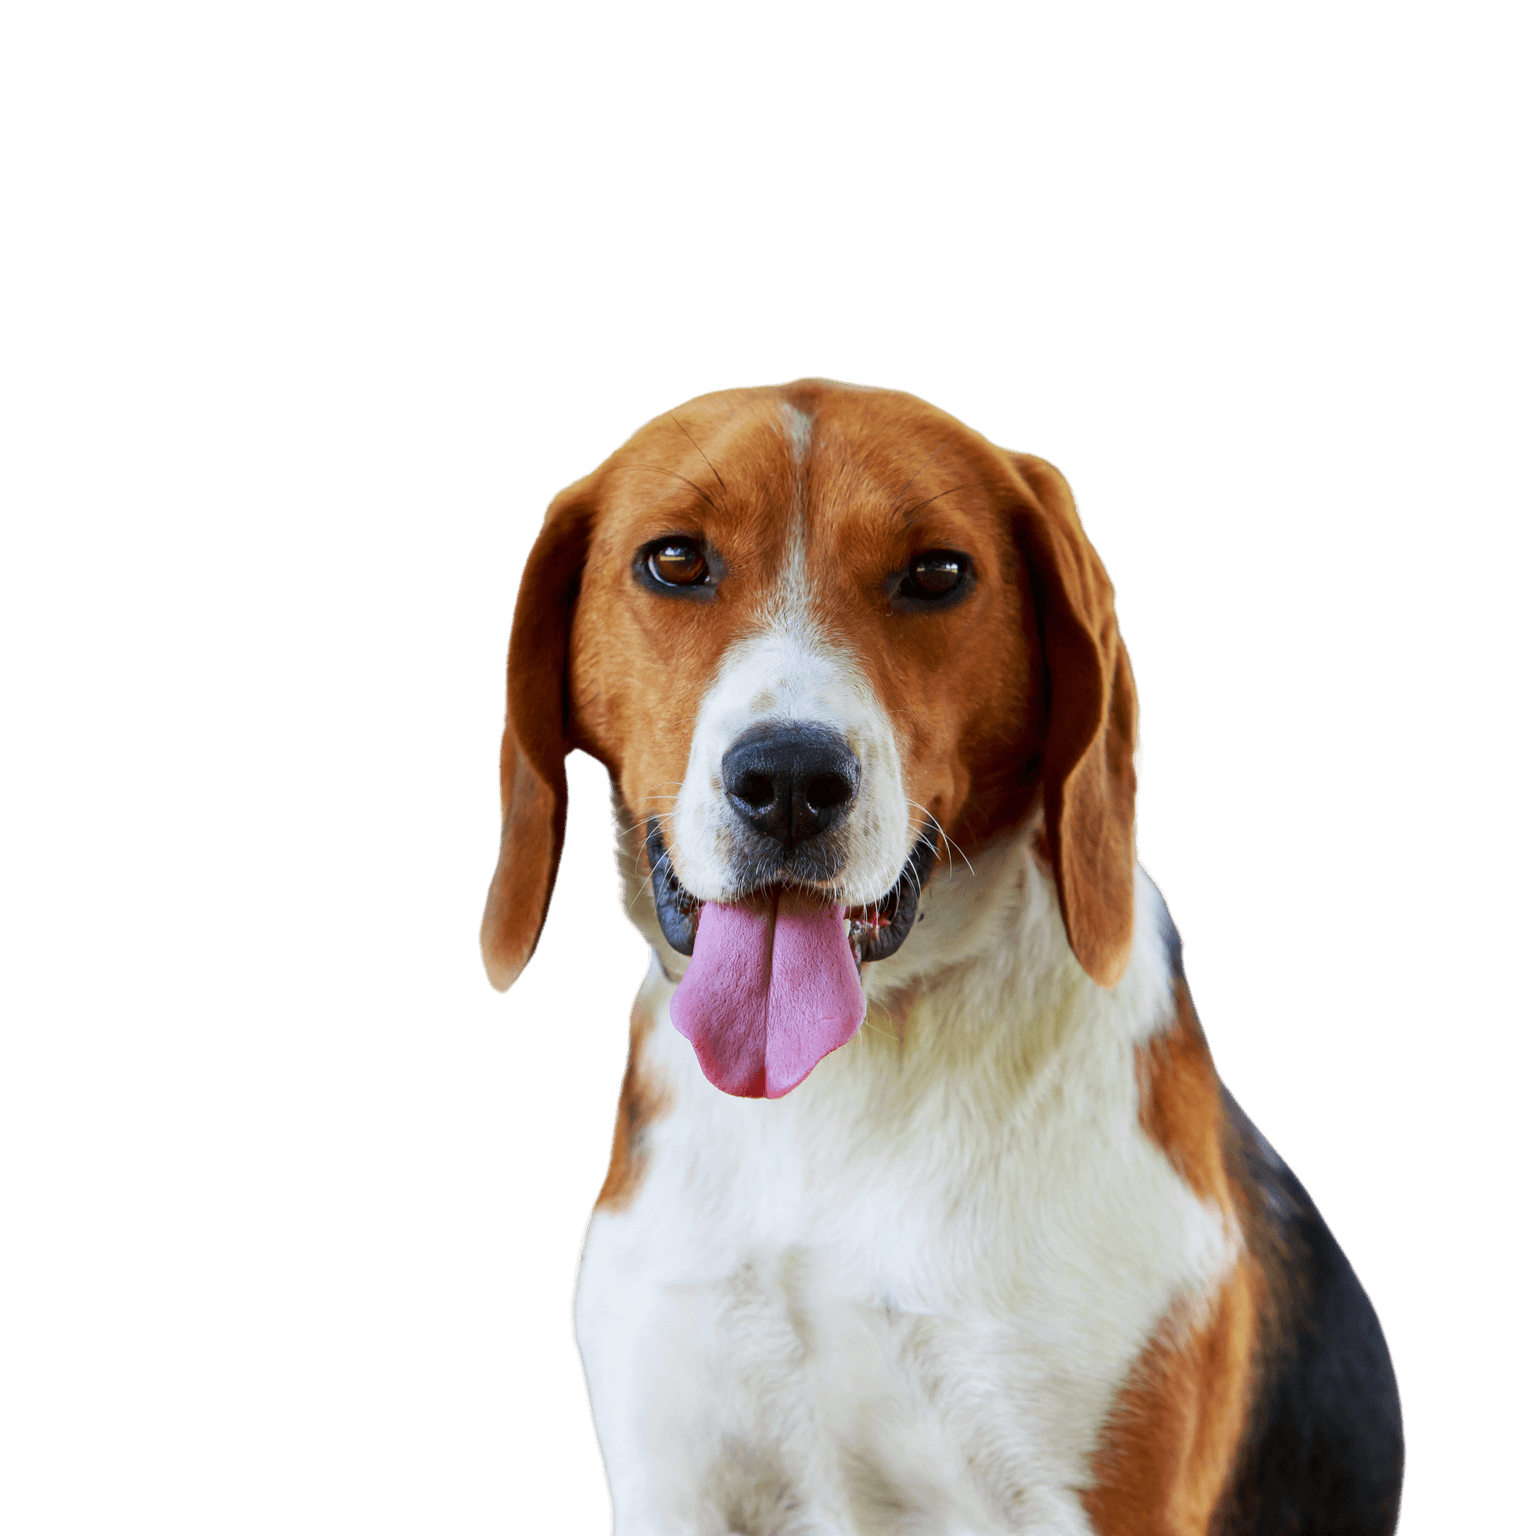 American Foxhound breed description, dog similar to Beagle